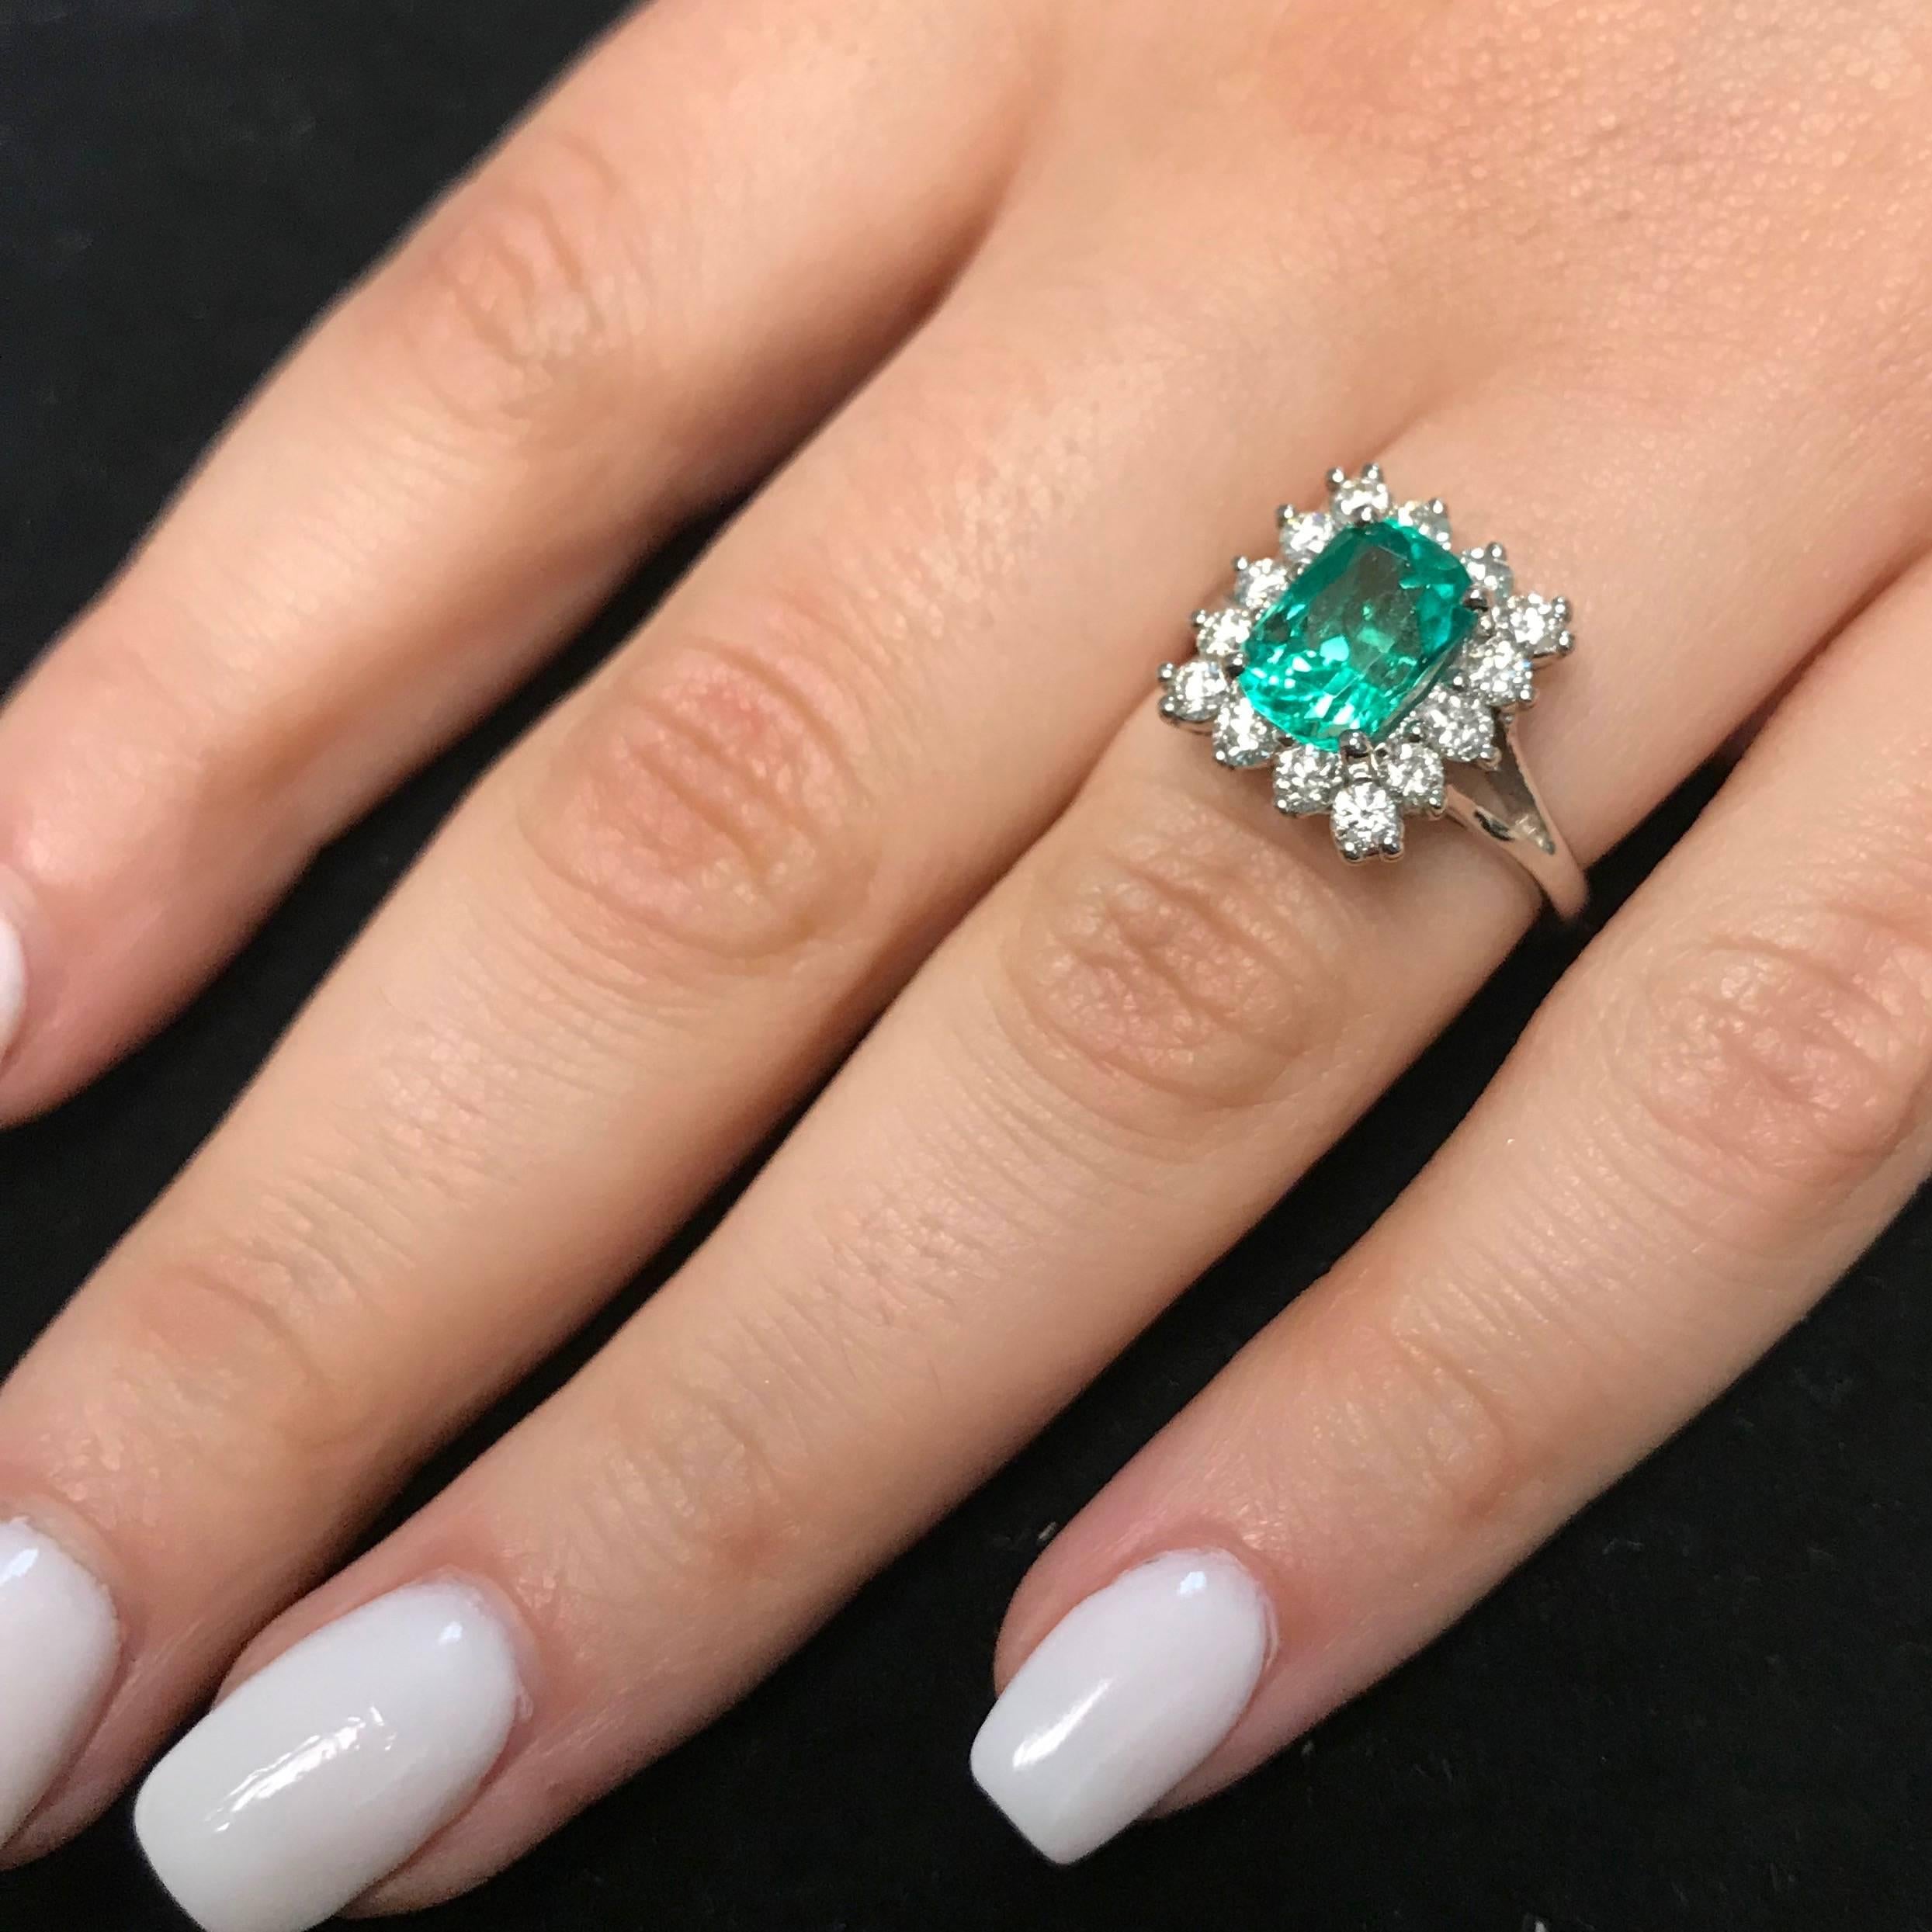 2.14 carat diamond ring